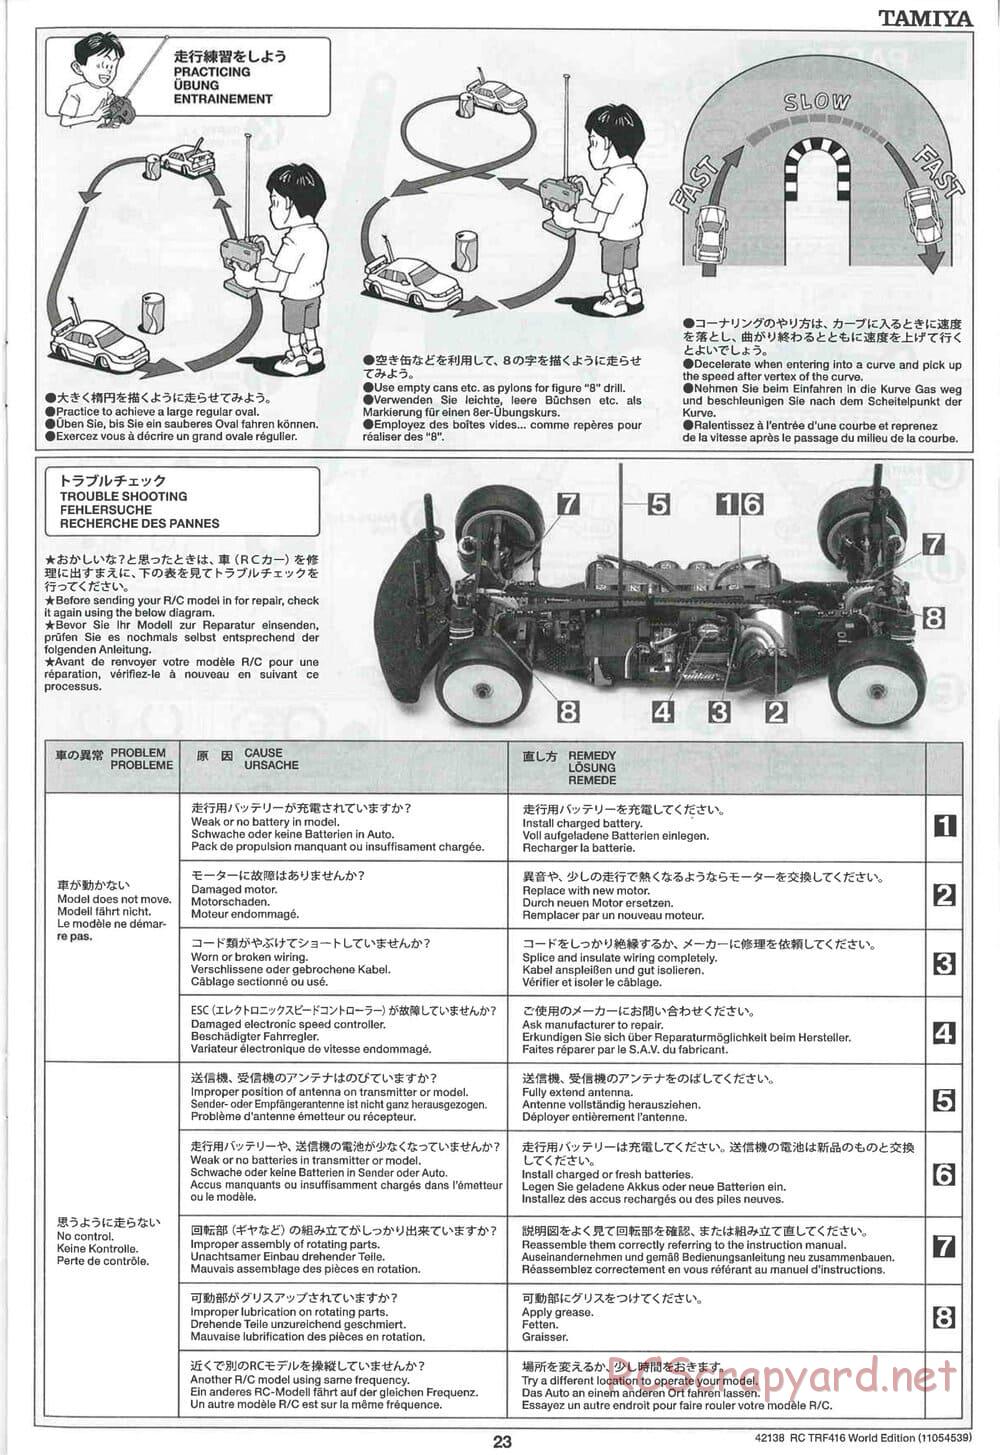 Tamiya - TRF416 World Edition Chassis - Manual - Page 23